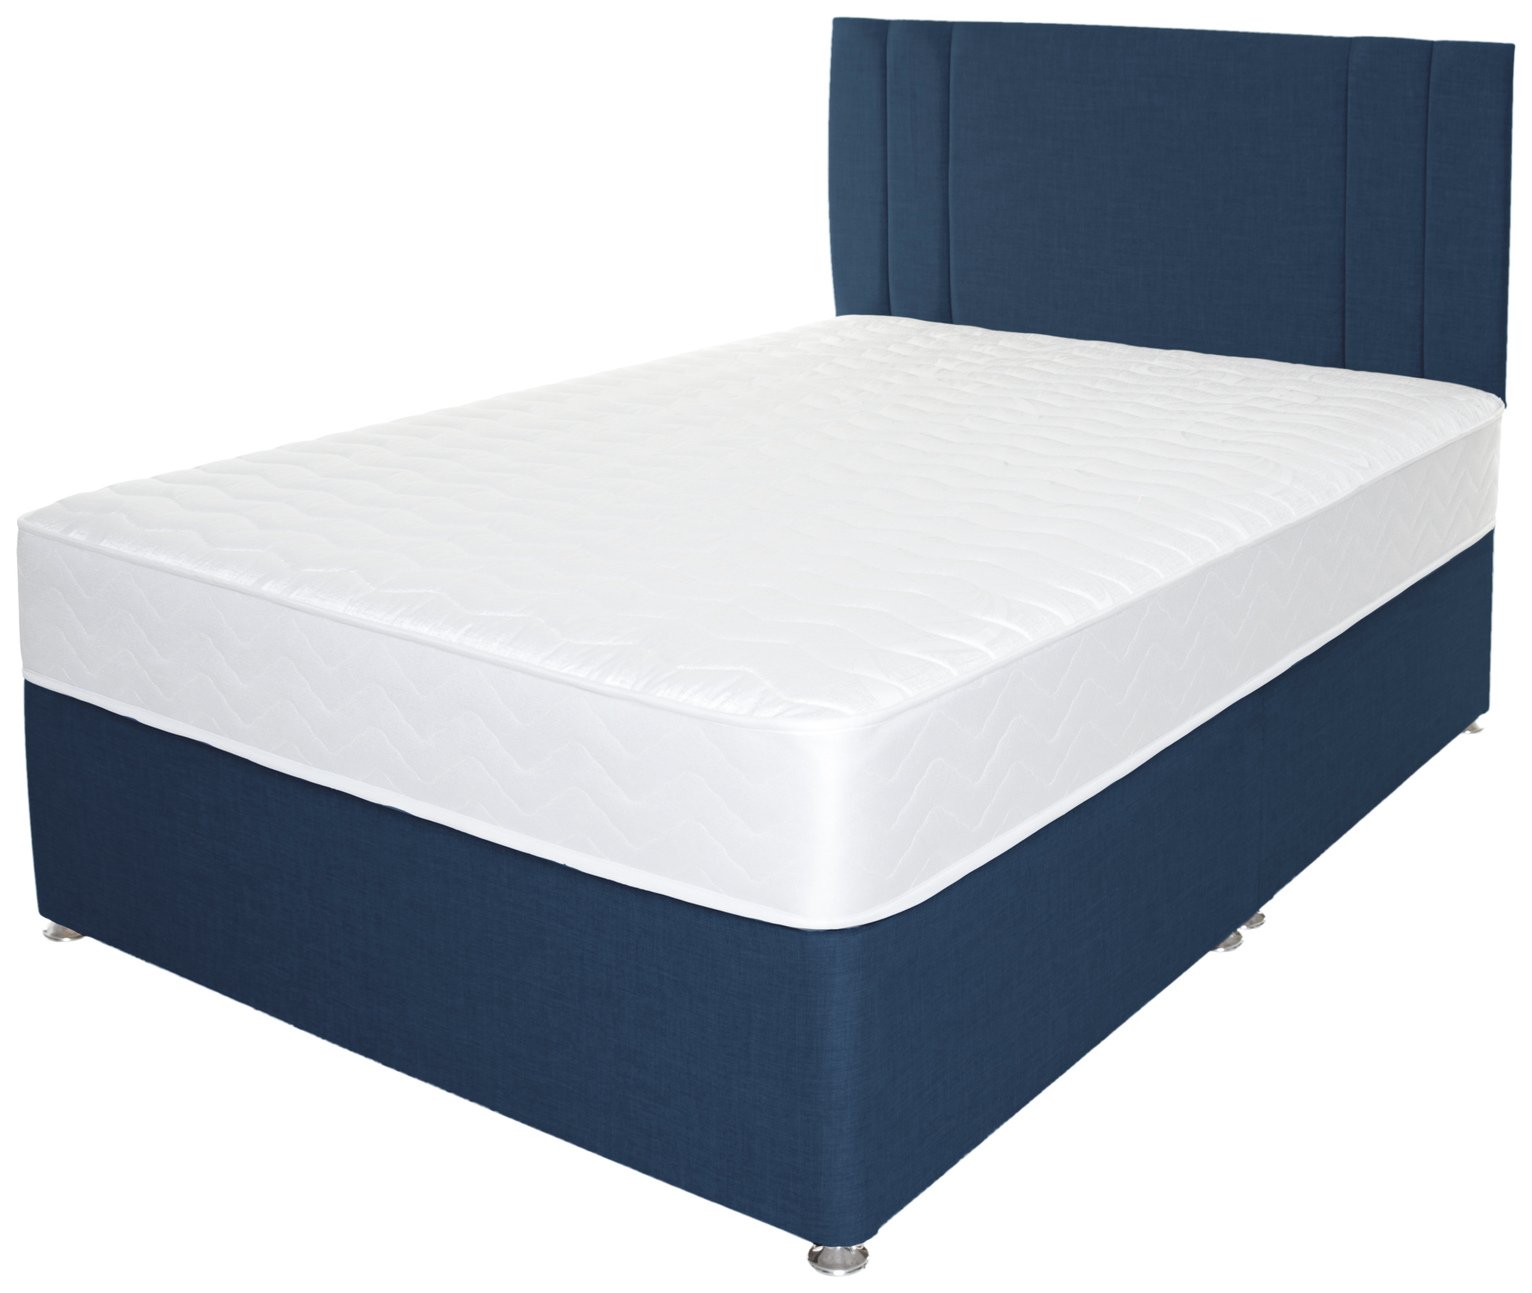 Airpsrung Henlow 1200 Memory Divan Bed & Headboard - Blue at Argos